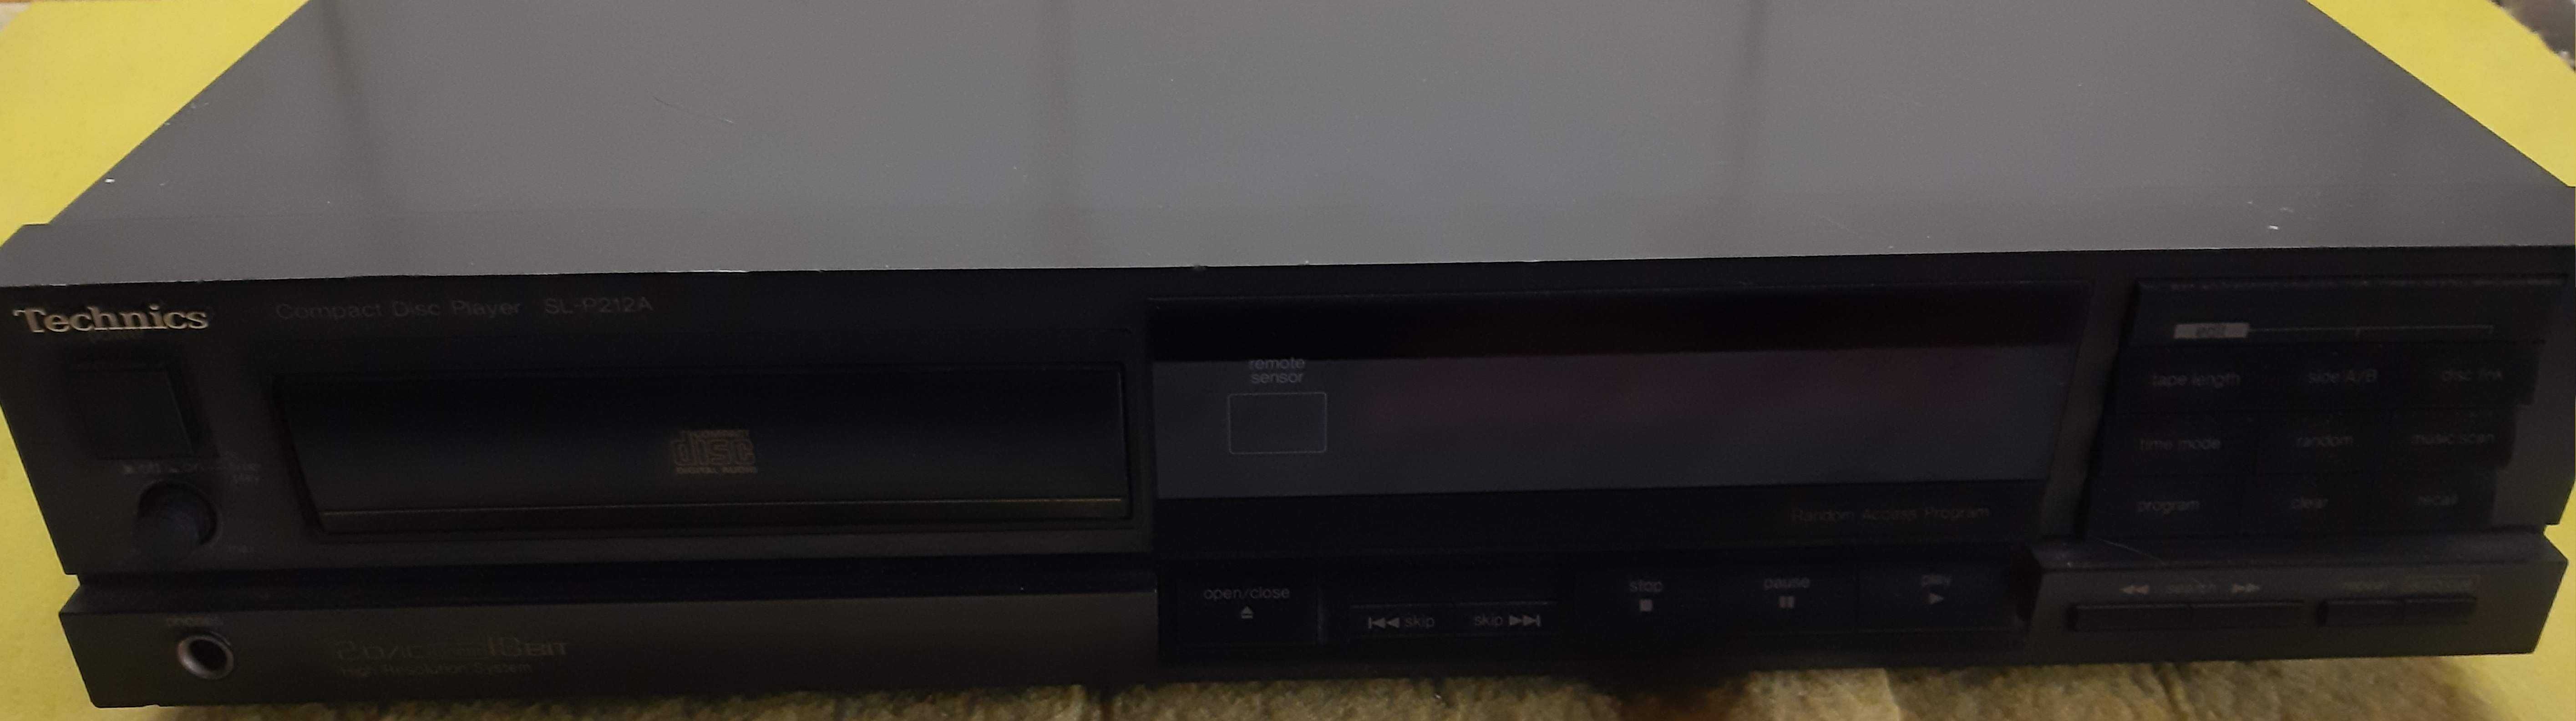 Technics Compact Disc Player SL-P212A